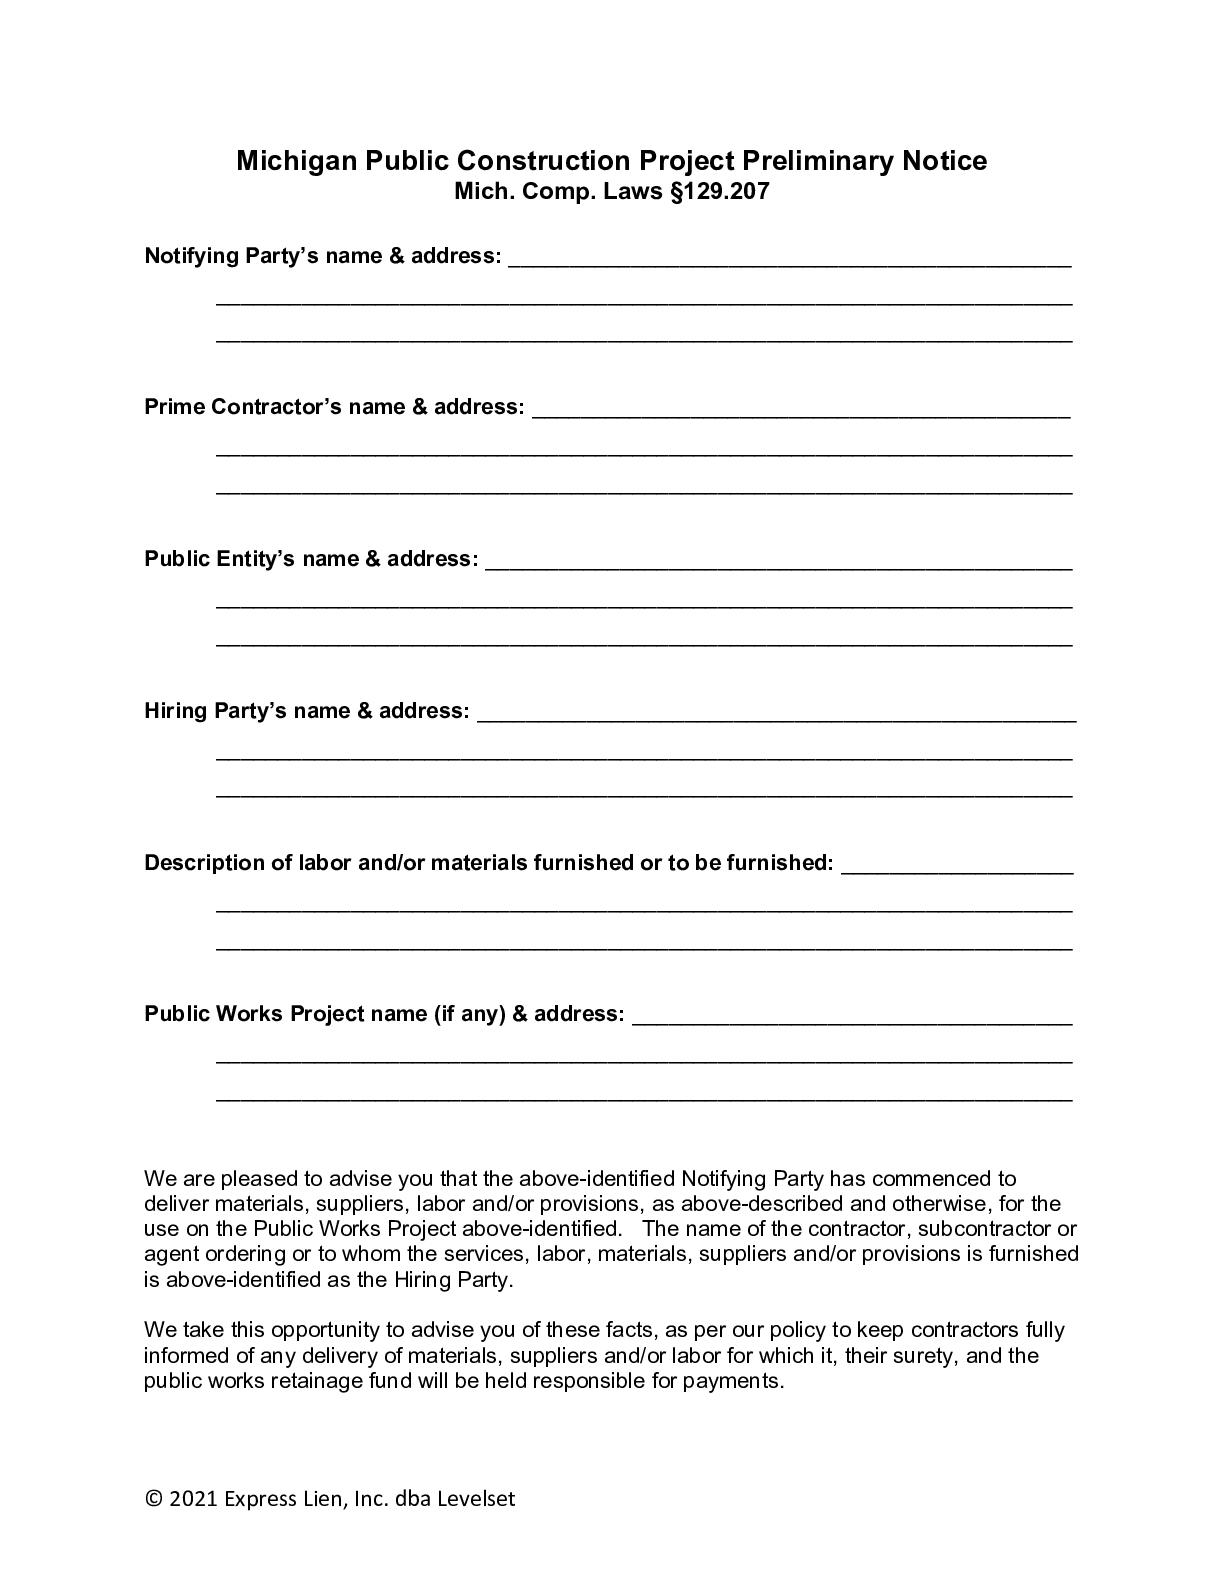 Michigan Preliminary Notice (Public Projects) Form